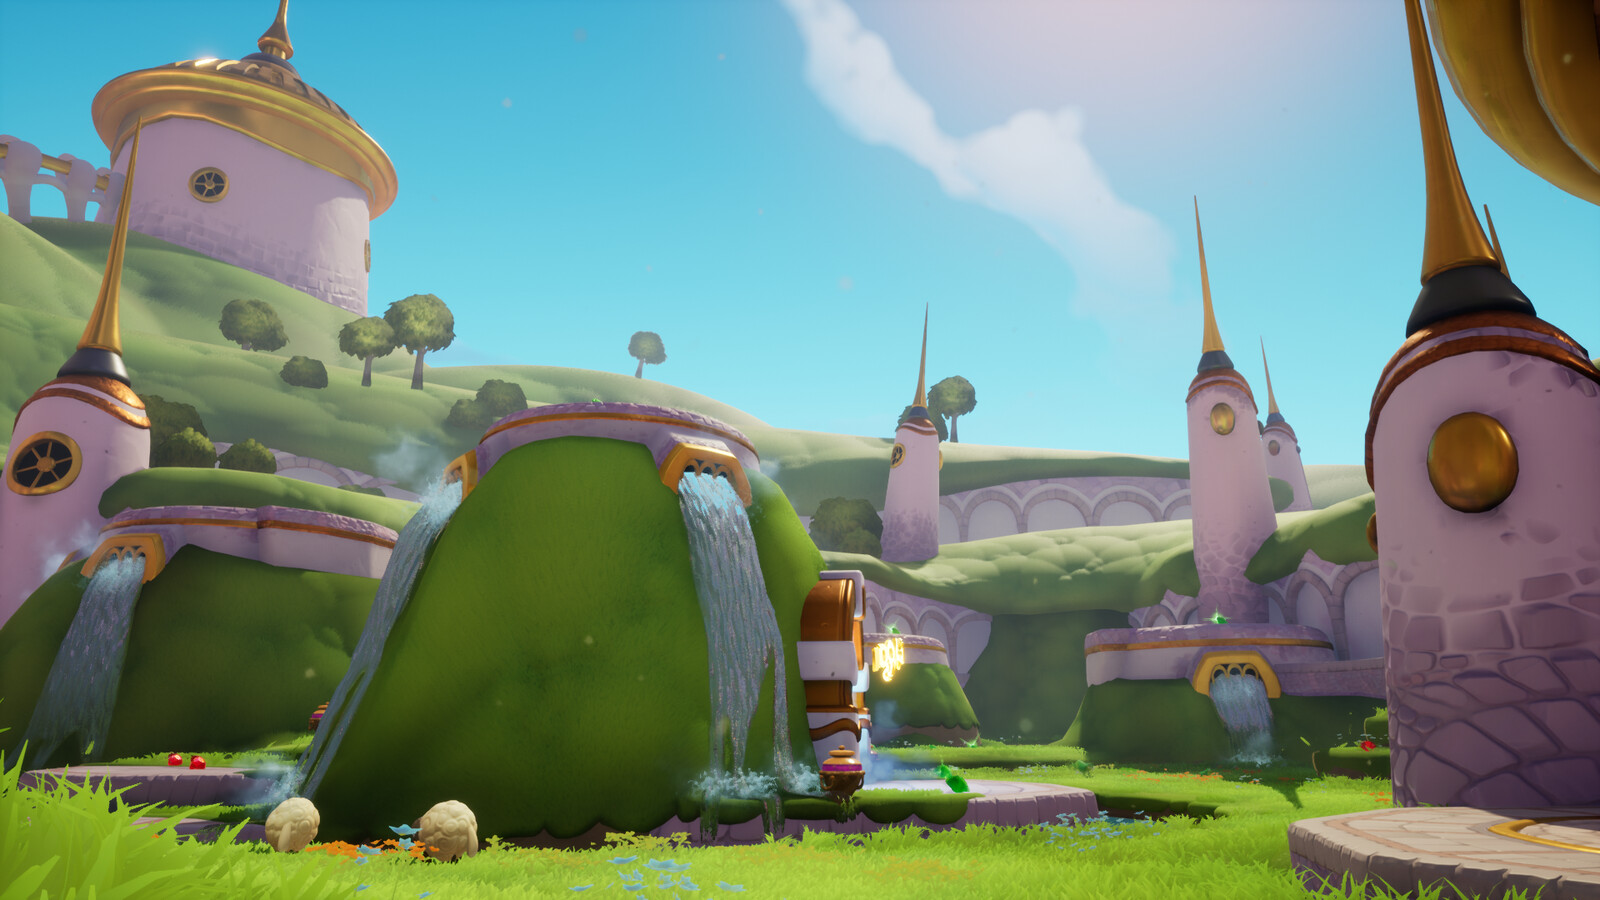 Airborn Studios - Spyro 2 - Summer Forest Screenshots